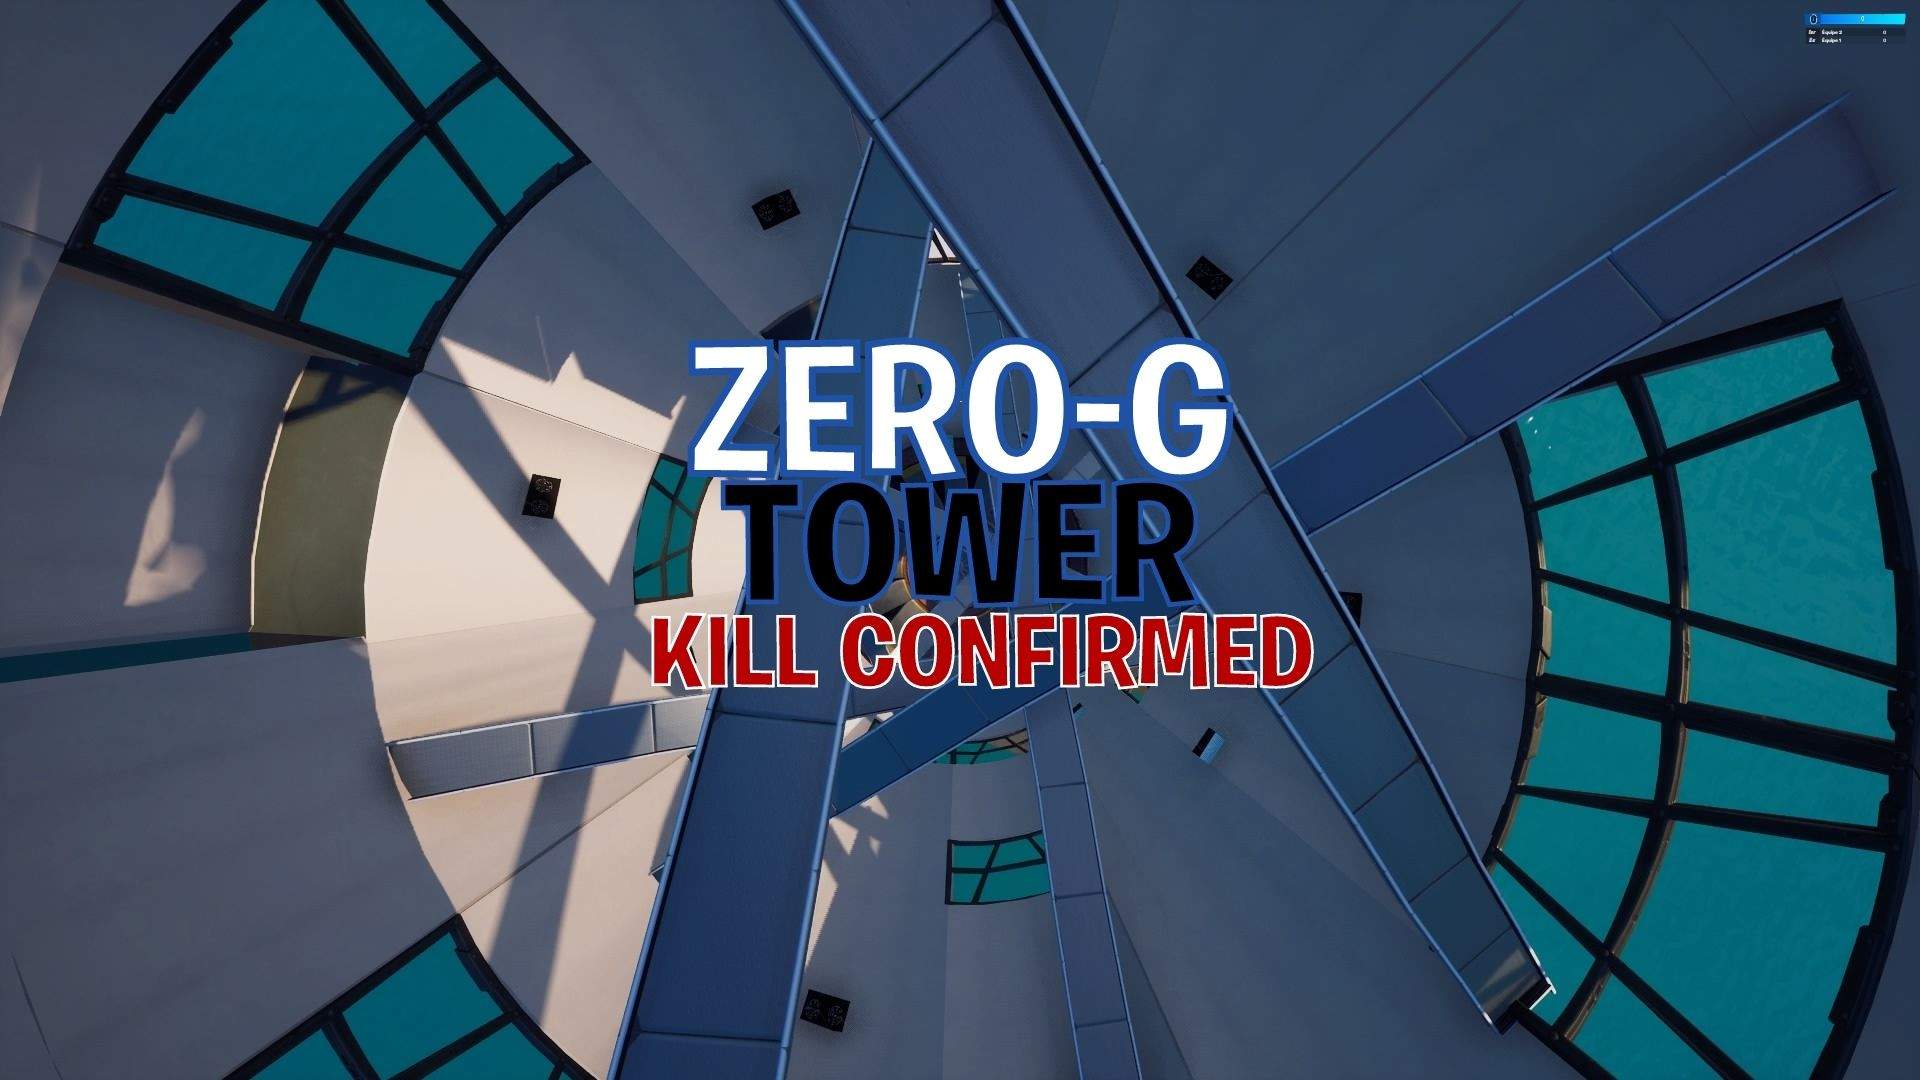 ZERO-G TOWER - KILL CONFIRMED